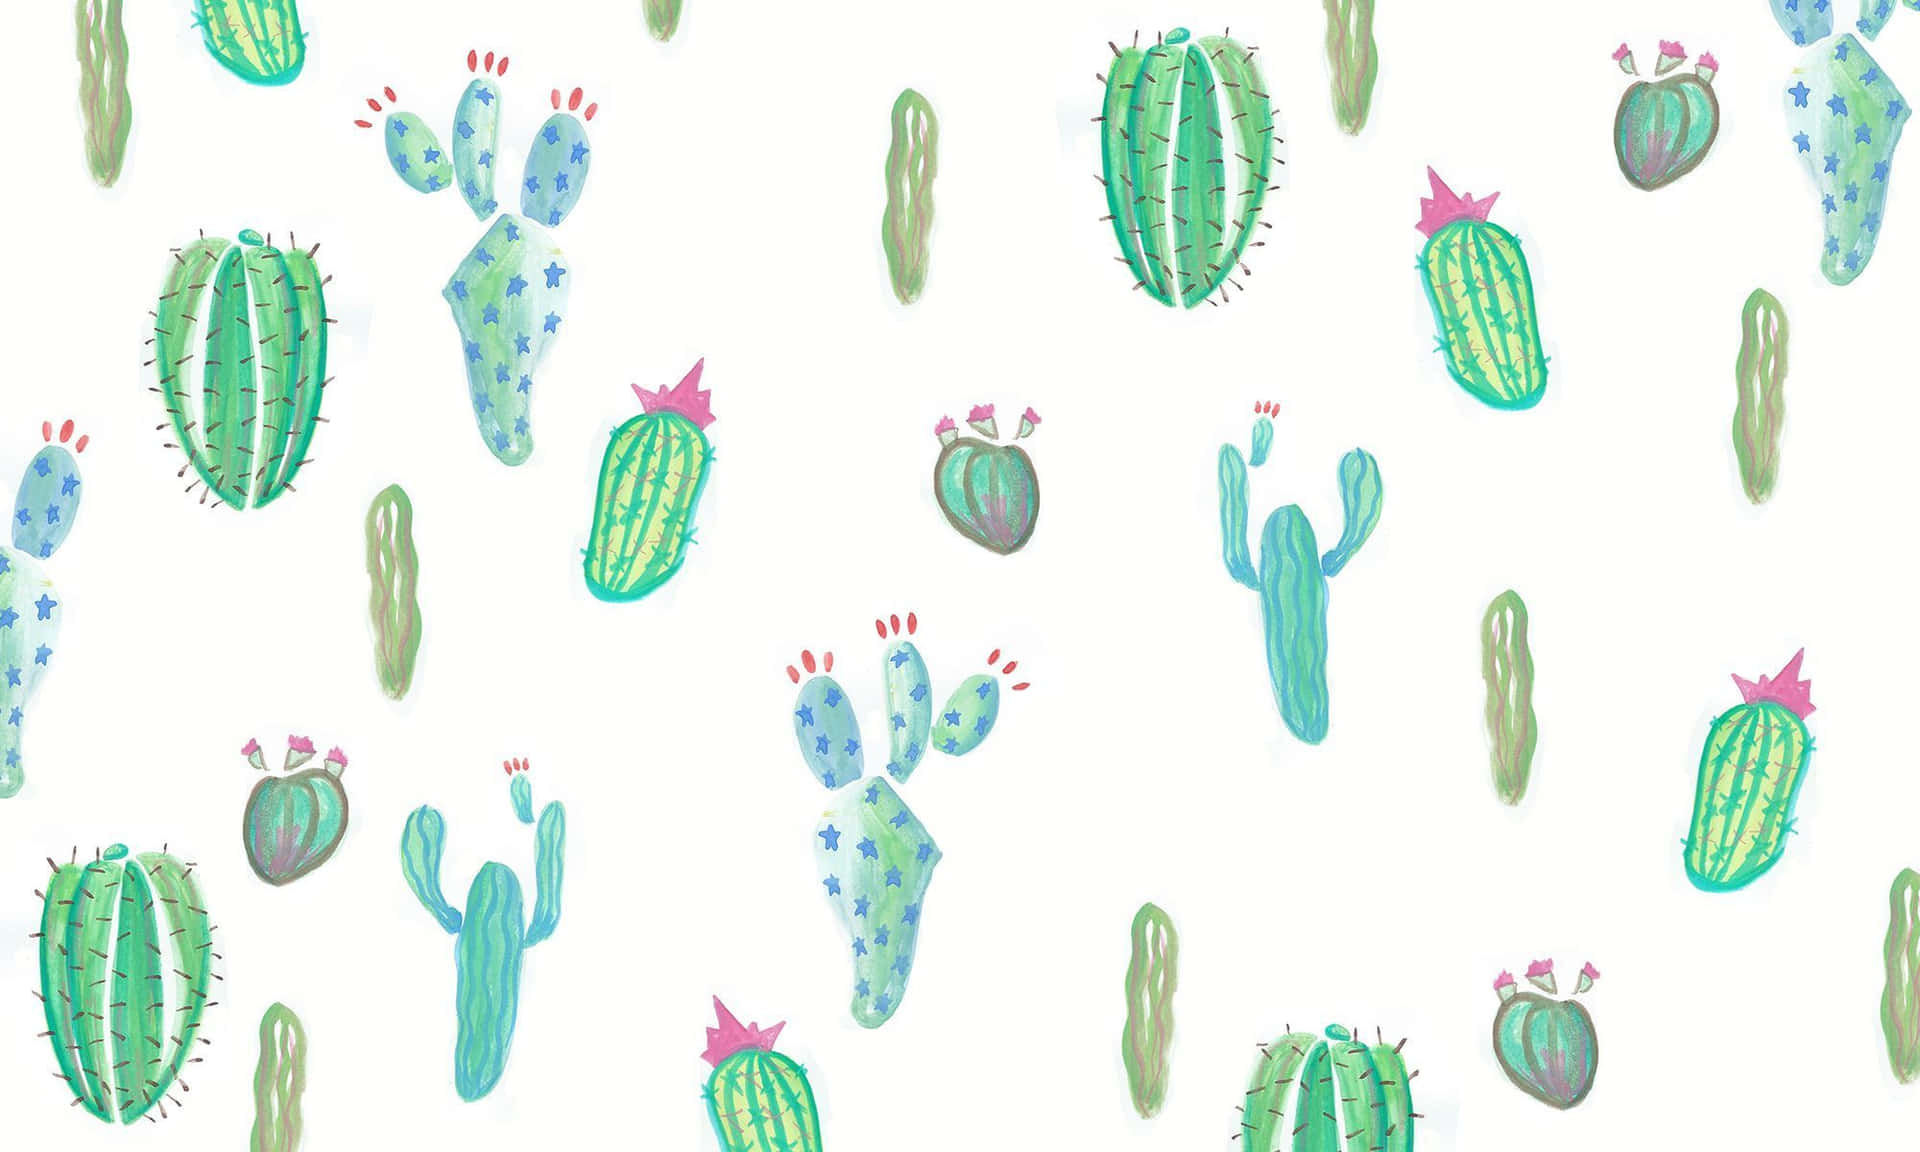 Cactus Desktop Wallpaper Images  Free Photos PNG Stickers Wallpapers   Backgrounds  rawpixel